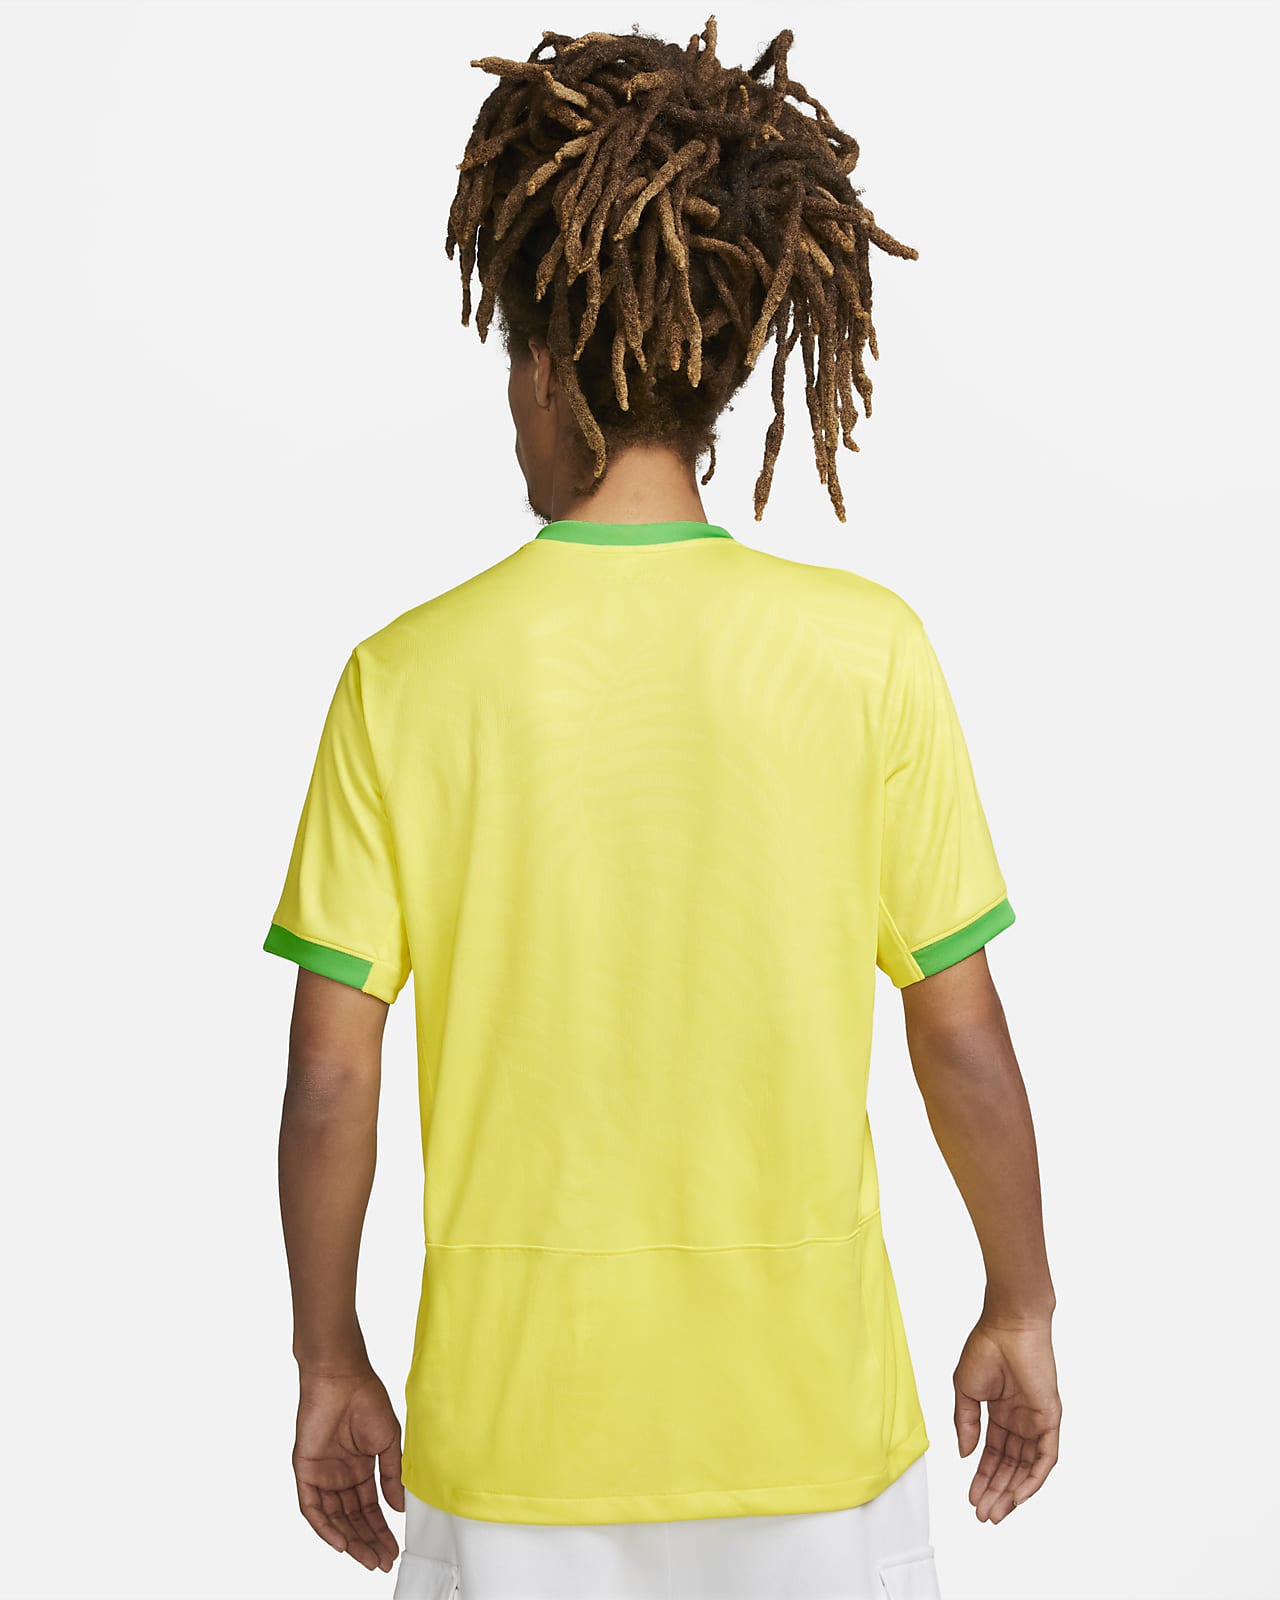 Men's Nike Dri-fit Brasil Brazil Soccer Jersey Large Yellow Home